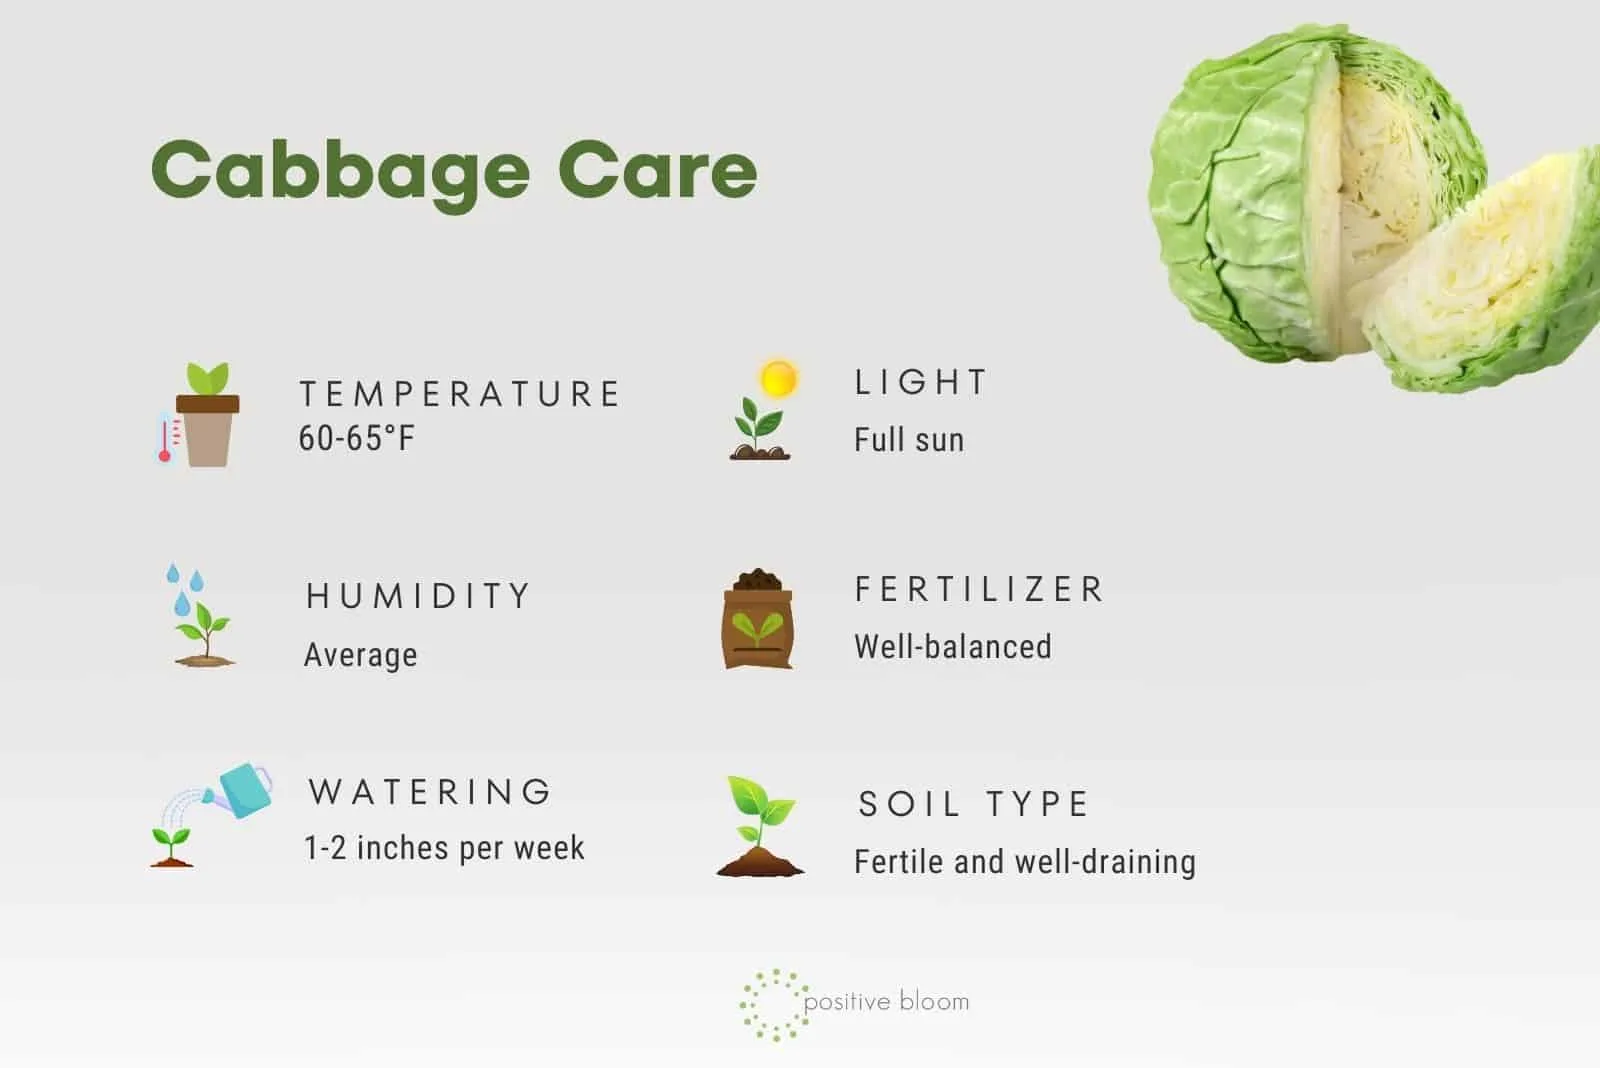 Cabbage Care